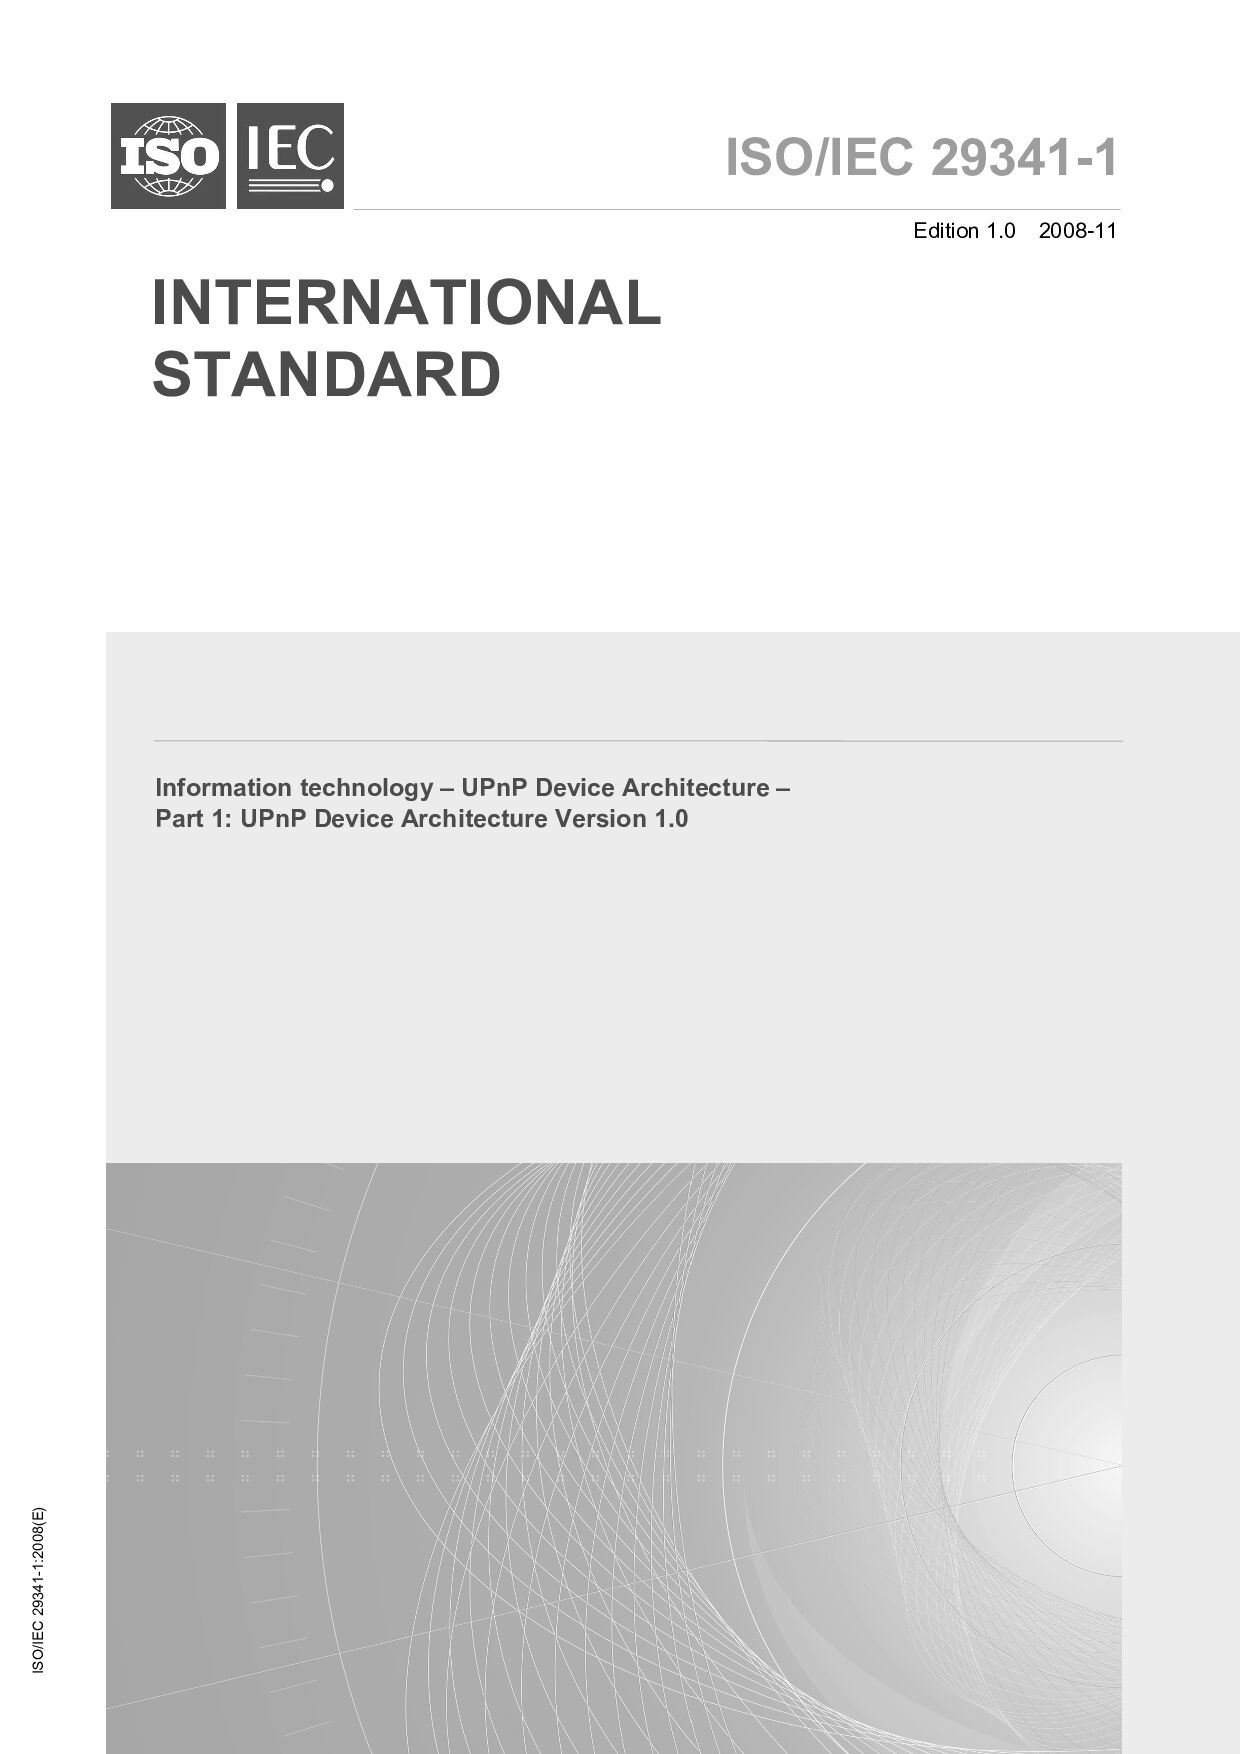 ISO/IEC 29341-1:2008